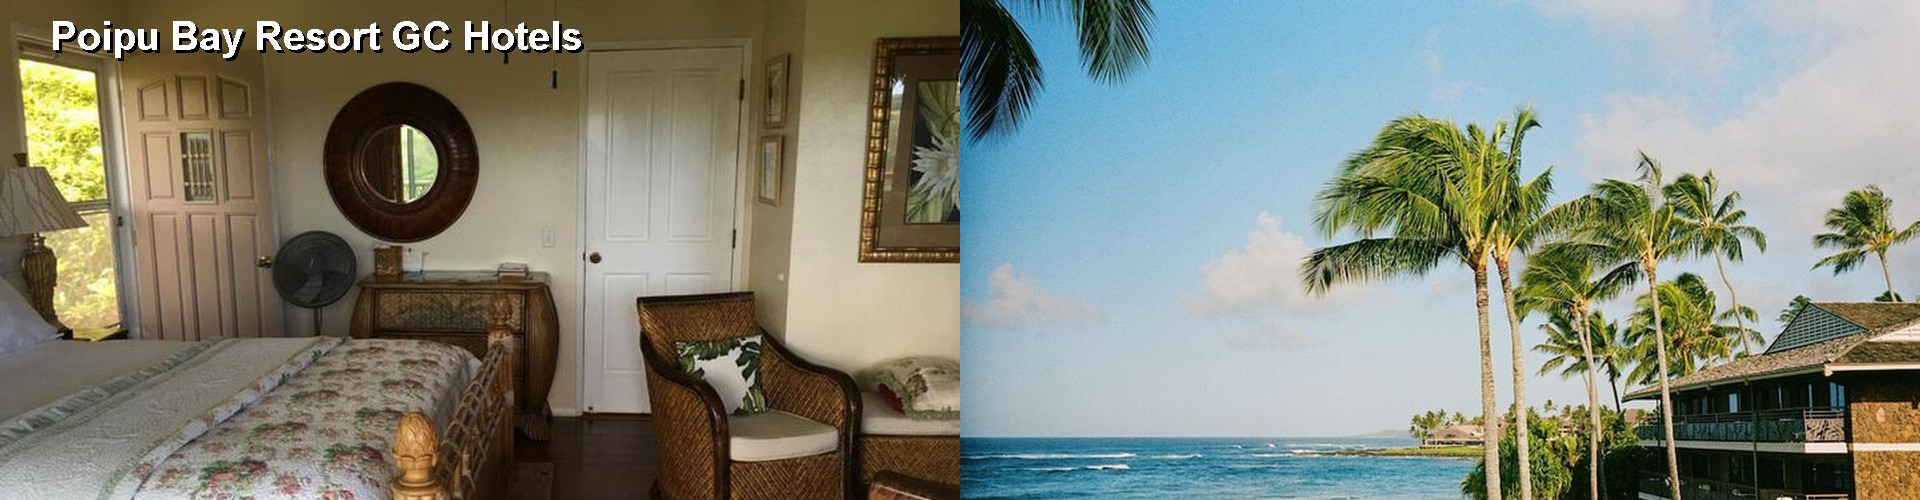 5 Best Hotels near Poipu Bay Resort GC